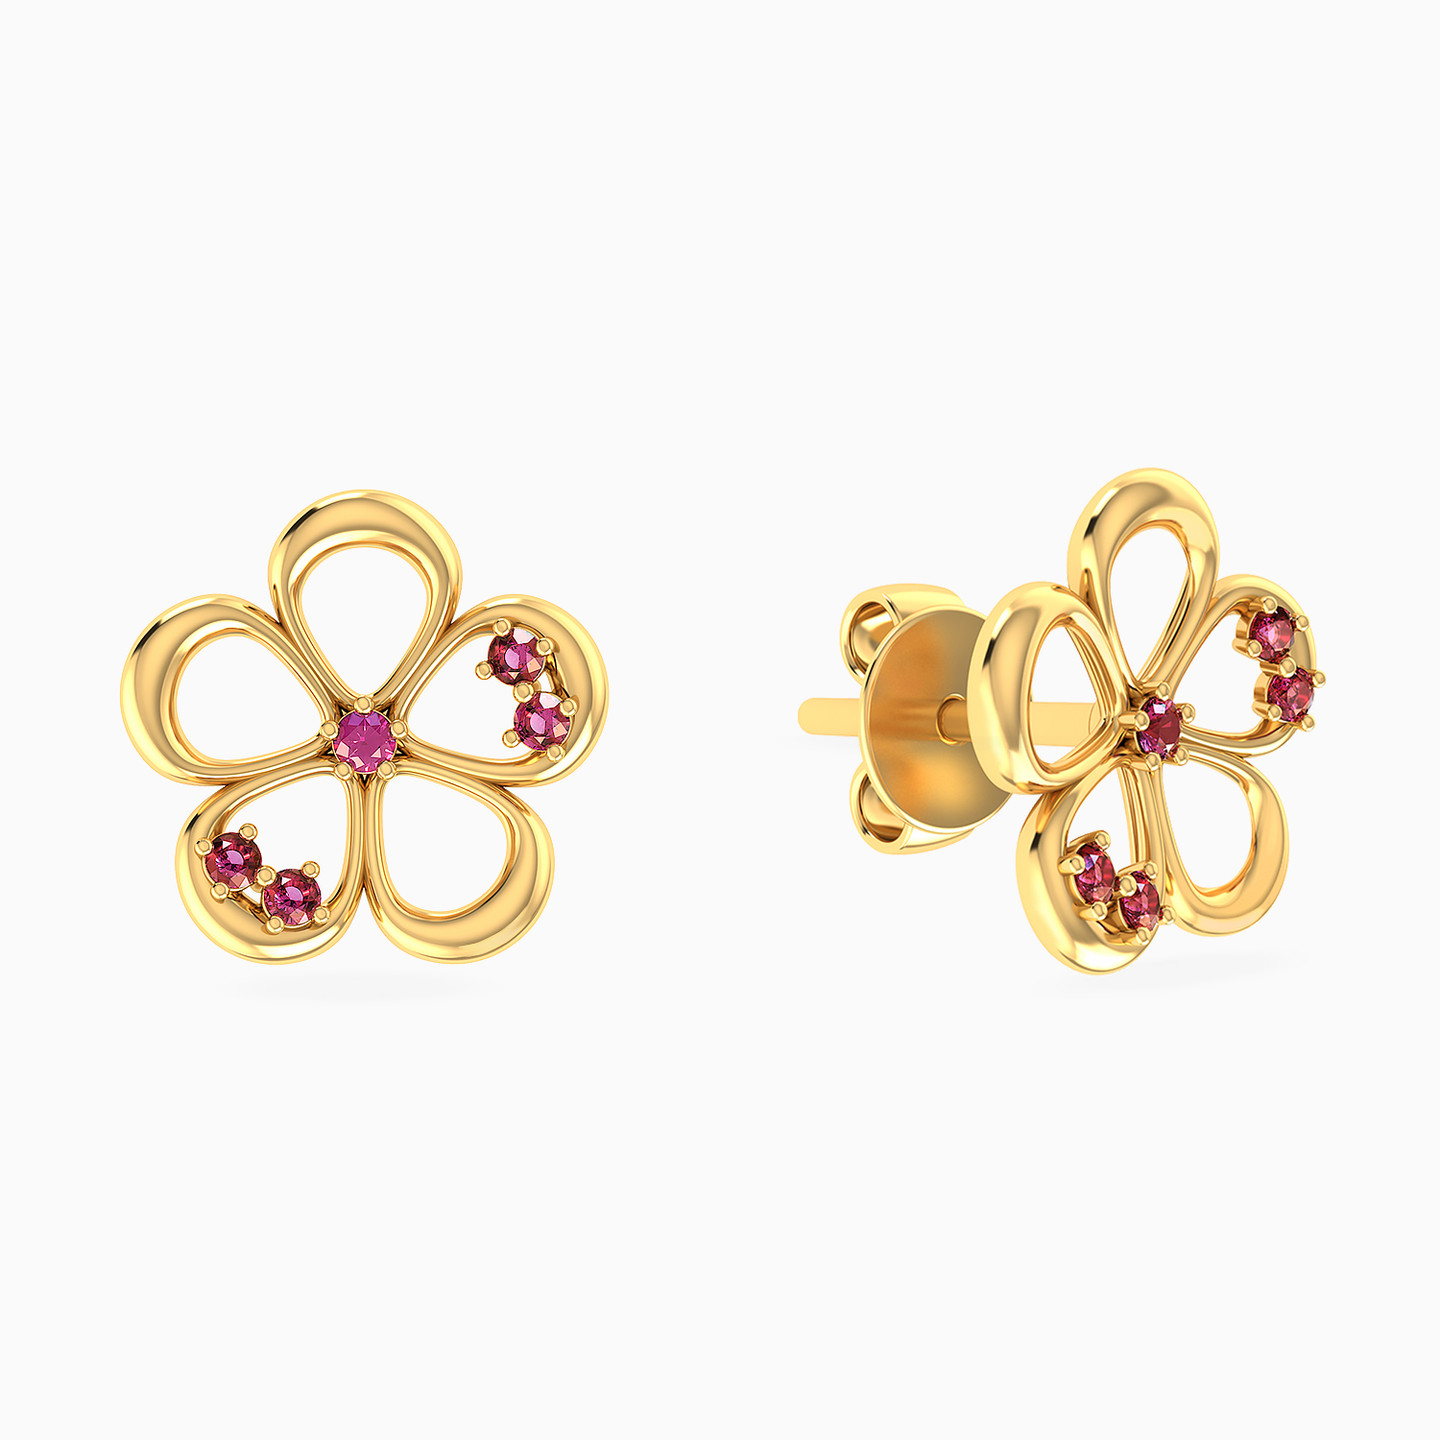 Flower Shaped Colored Stones Stud Earrings in 18K Gold - 2